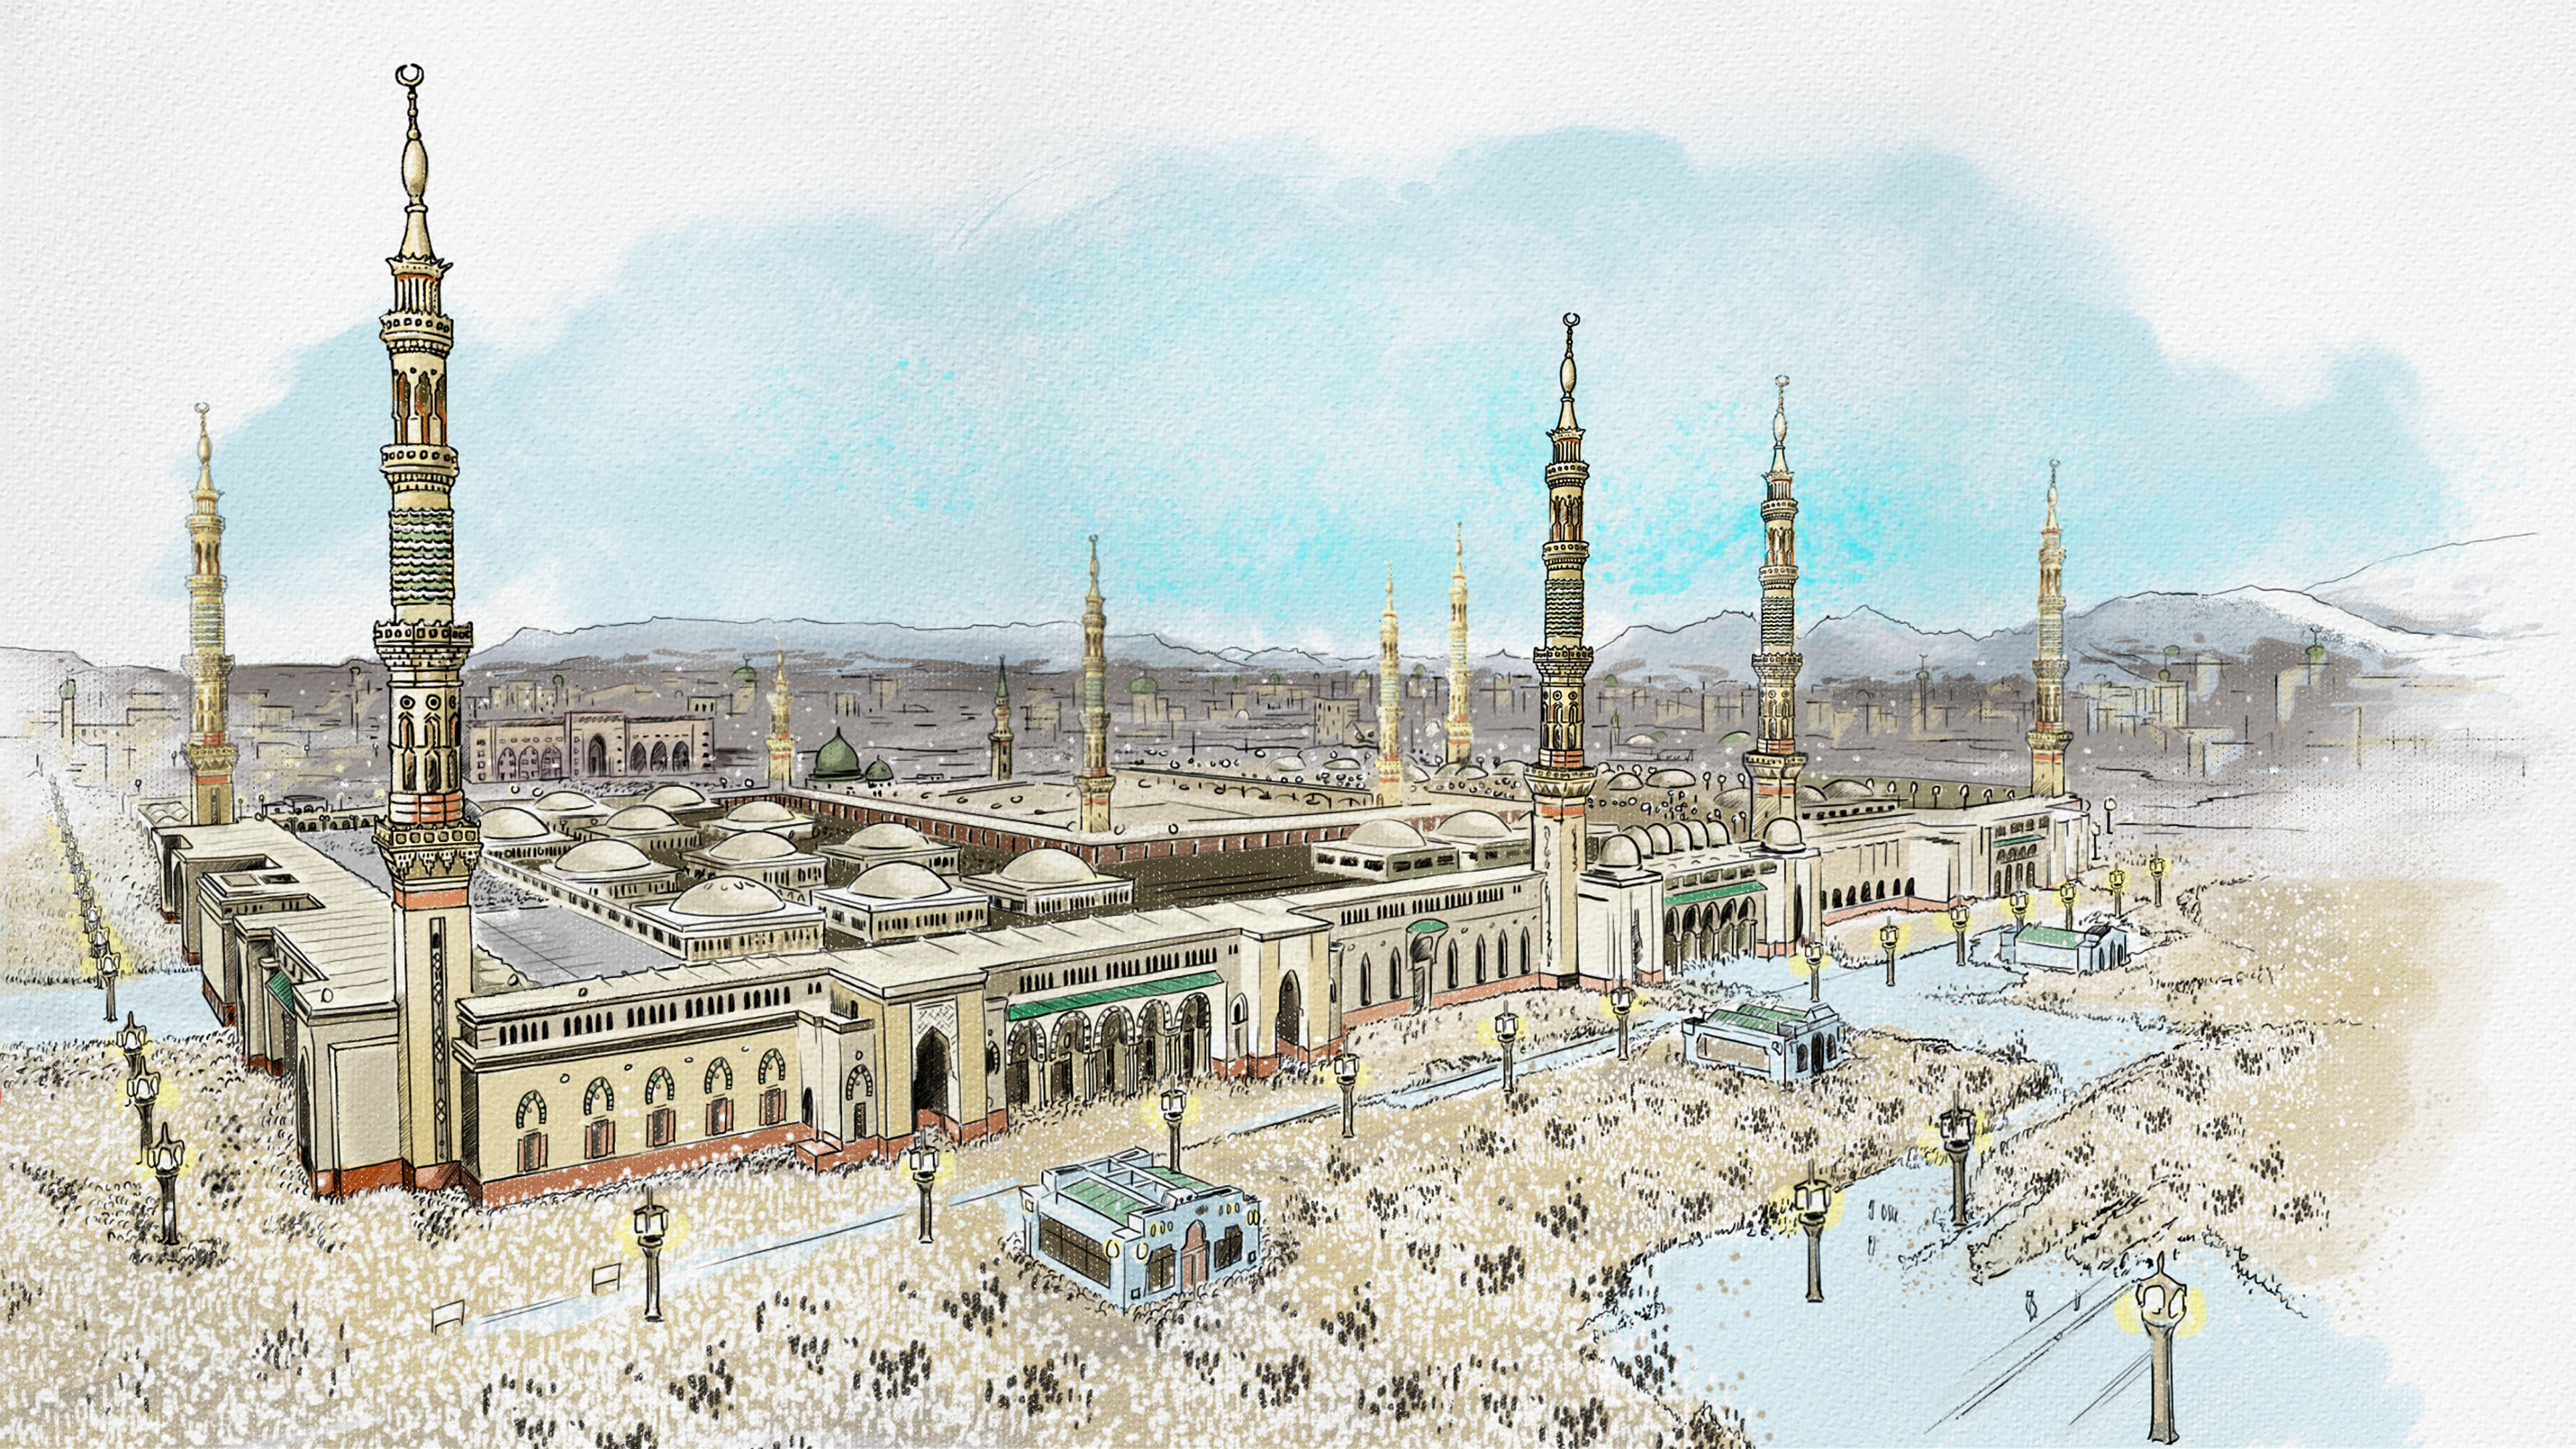 Город мекка и медина. Мечеть пророка (Масджид АН-Набави). Иллюстрация Медина Мекка. Рисунок Мекки Медины. Мечеть в Медине рисунок.